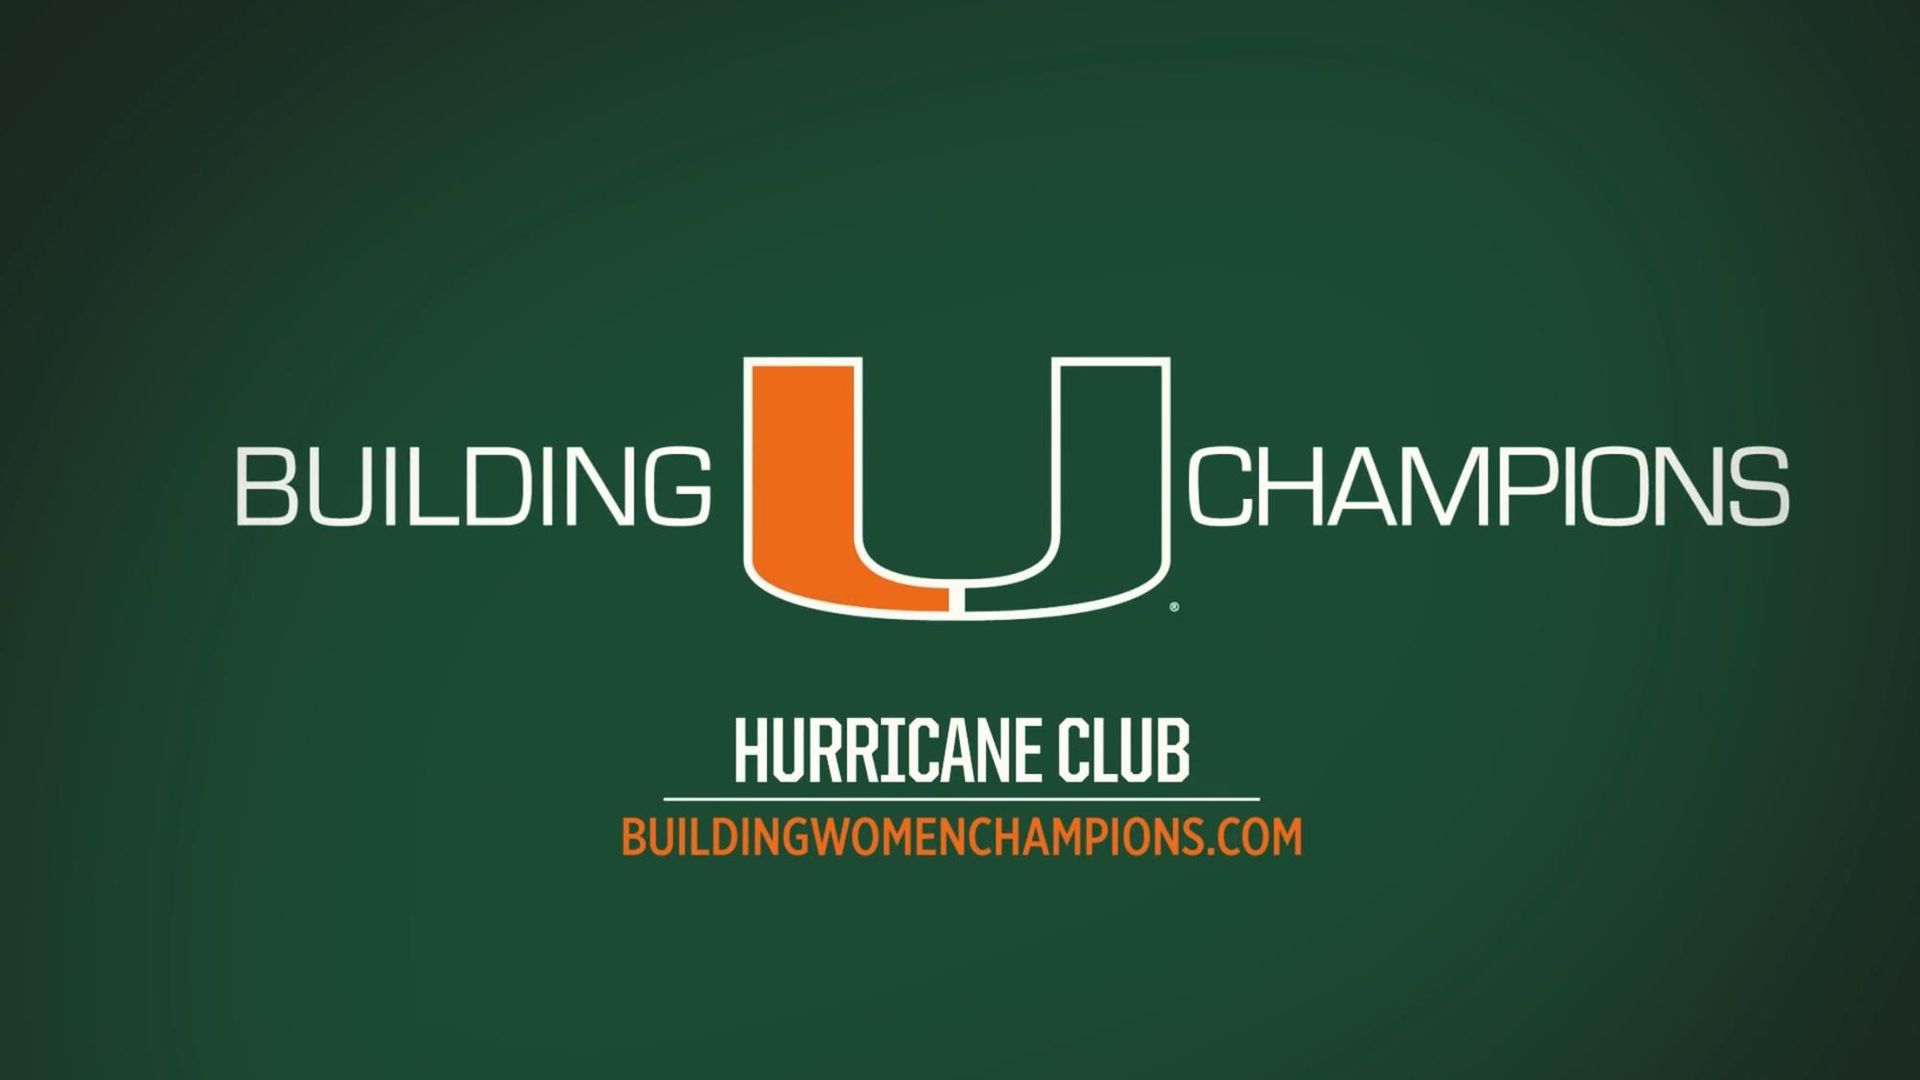 Miami Athletics Kicks off Building Women Champions Campaign